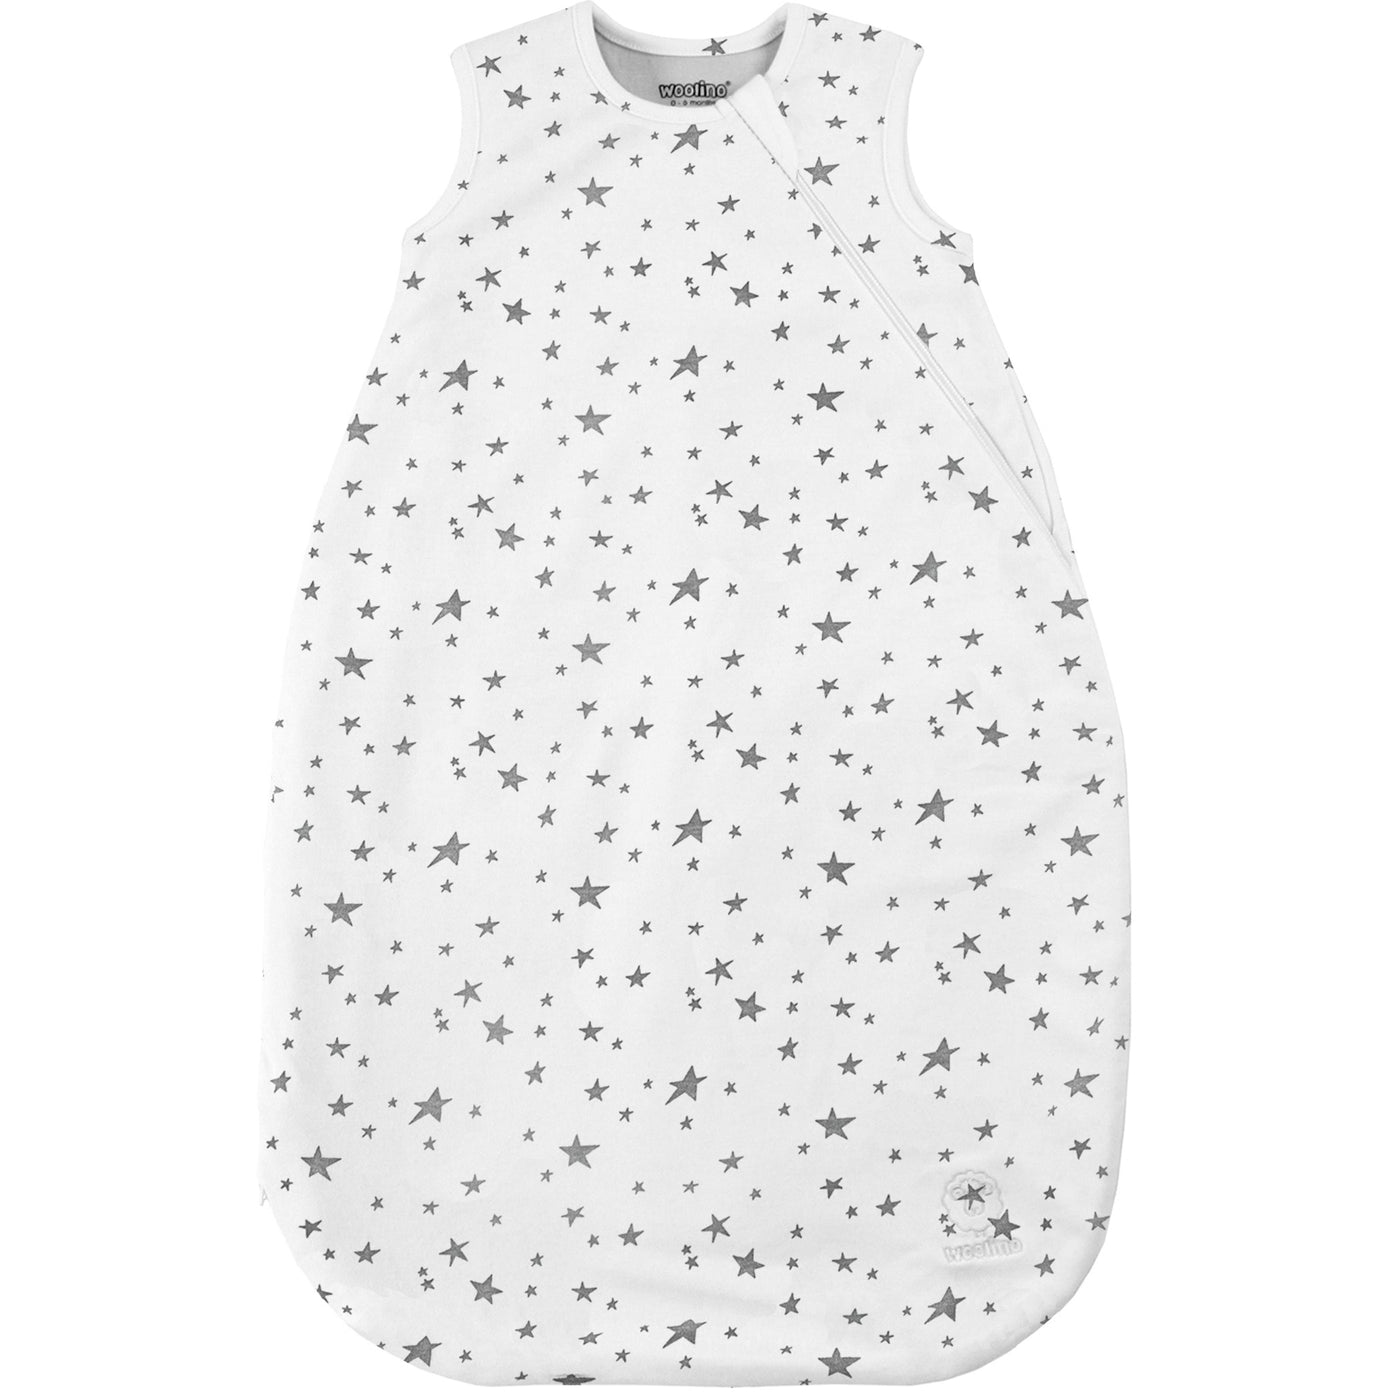 Woolino Baby Sleep Bag Sack 4 Season Basic Merino Wool Baby Sleeping Bag Gown 0-6 Months Gray